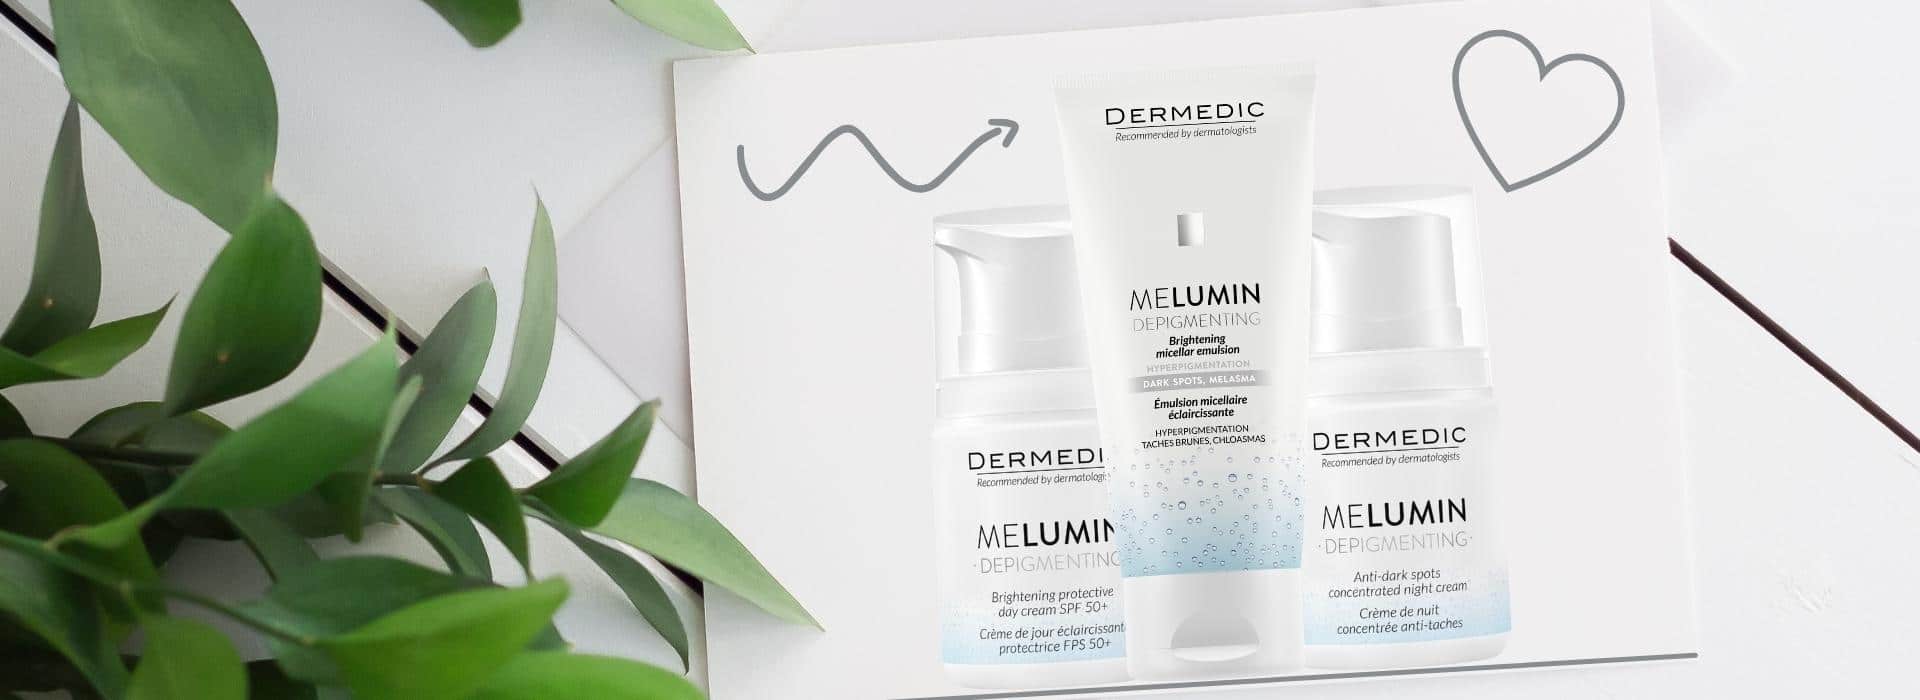 Dermedic-Melumin-pigmentfoltok-ellen